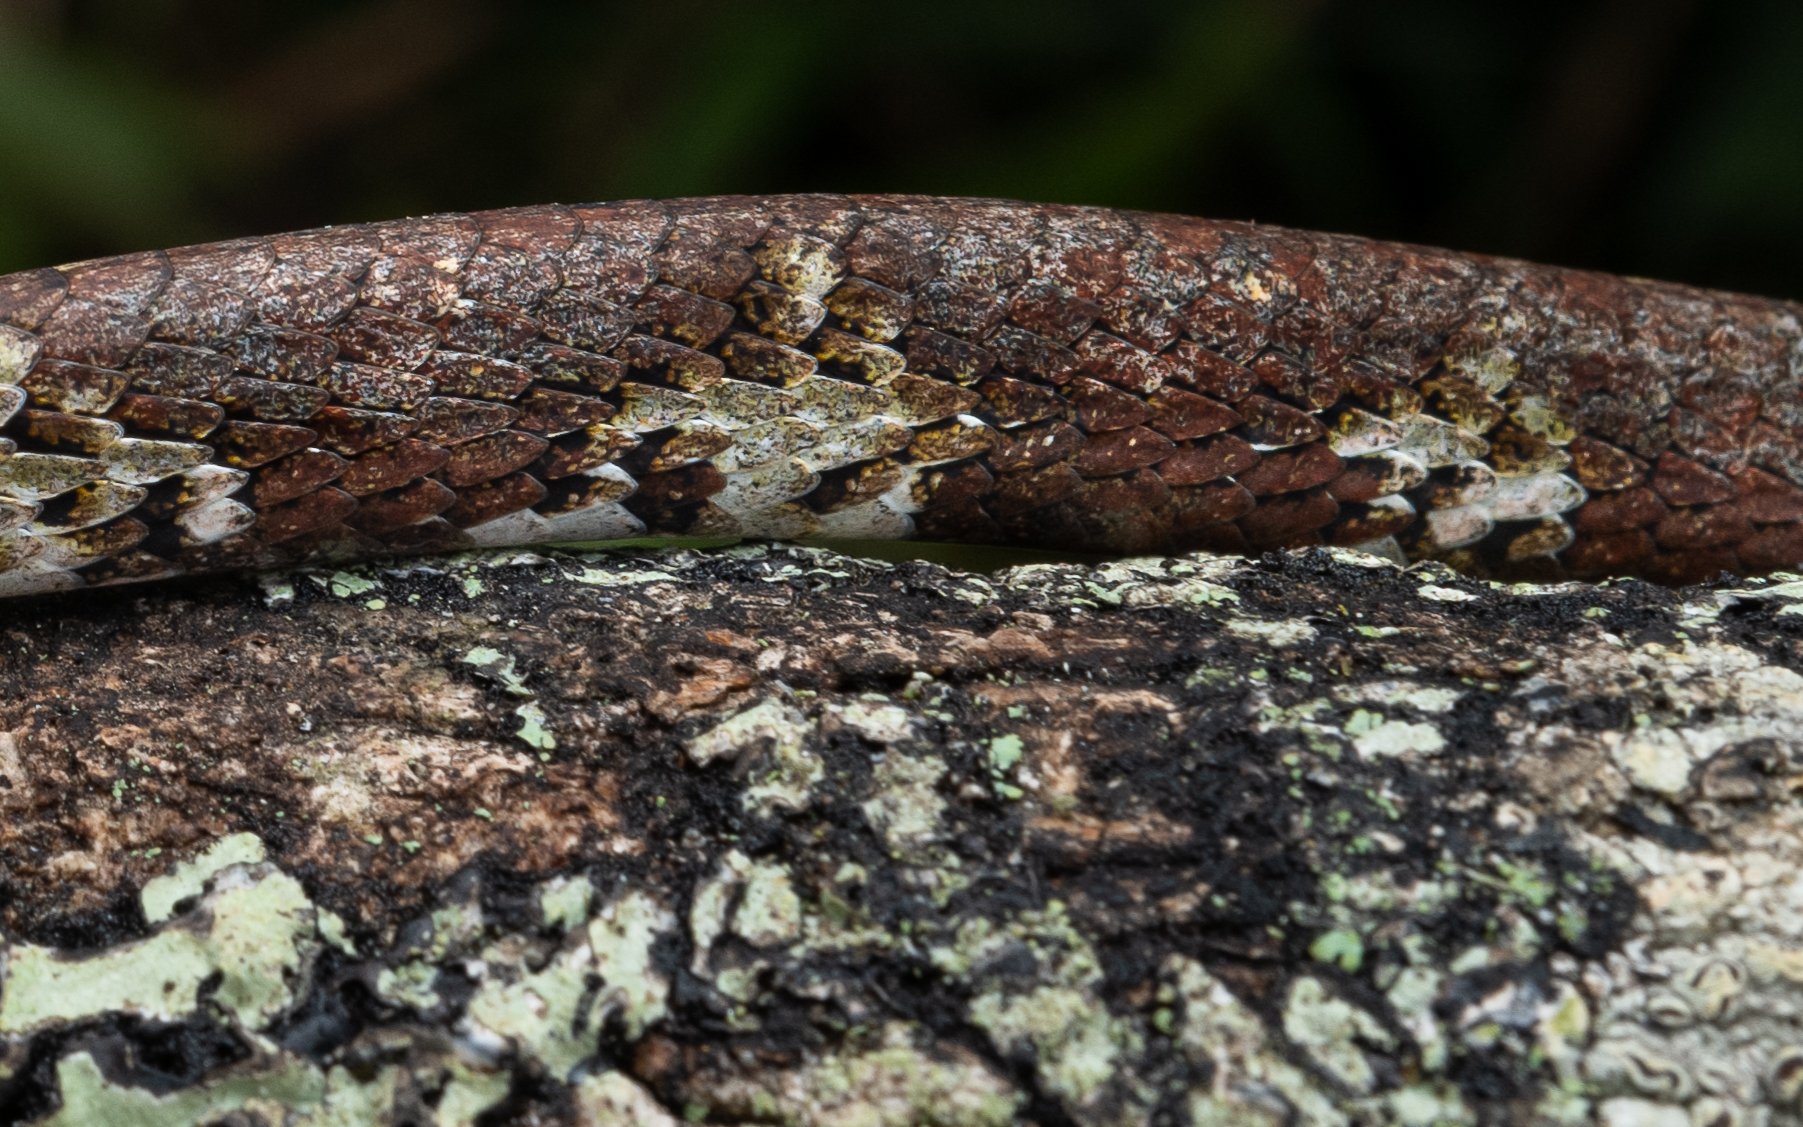 Blunt-headed Slug Snake - Aplopeltura boa